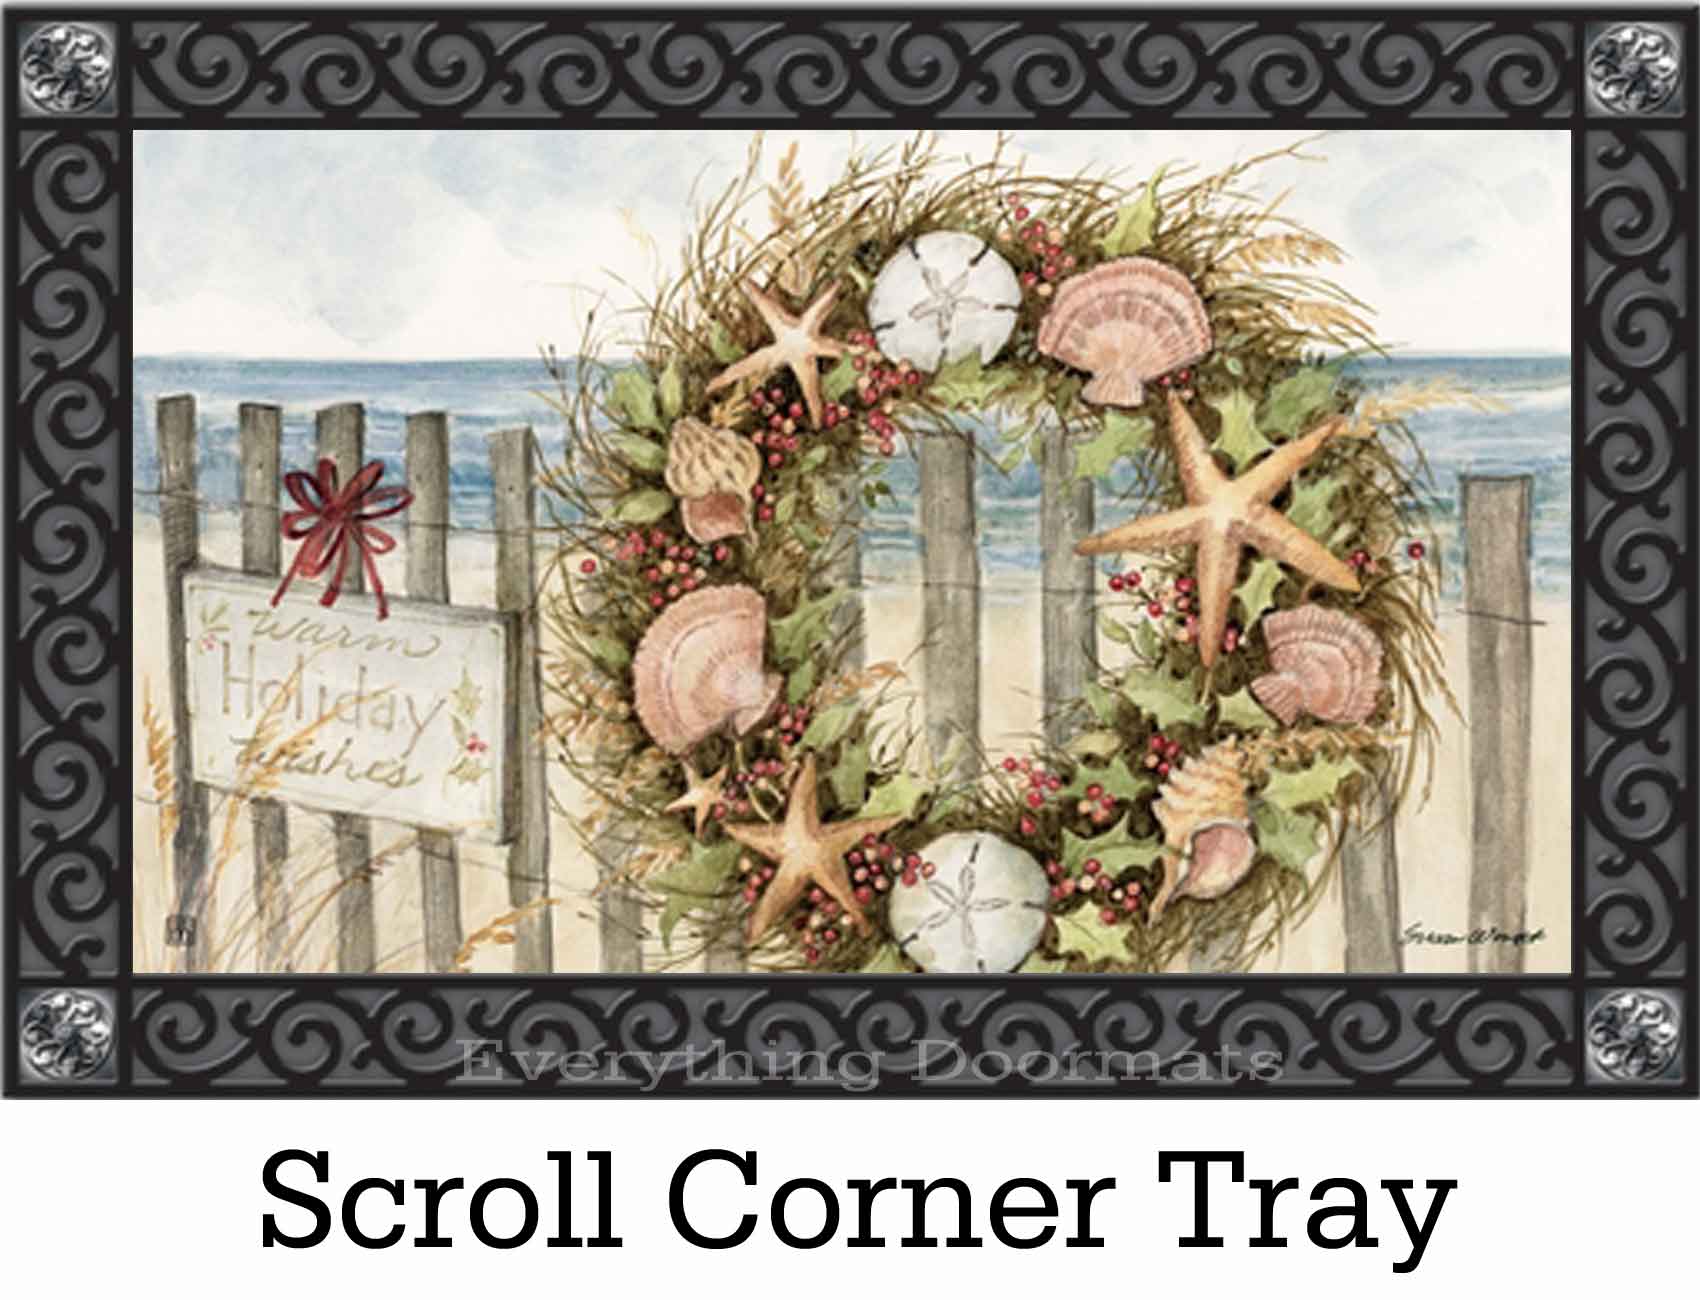 https://www.everythingdoormats.com/images/products/beach-wreath-matmates-insert-doormat-in-outdoor-scroll-corner-tray.jpg